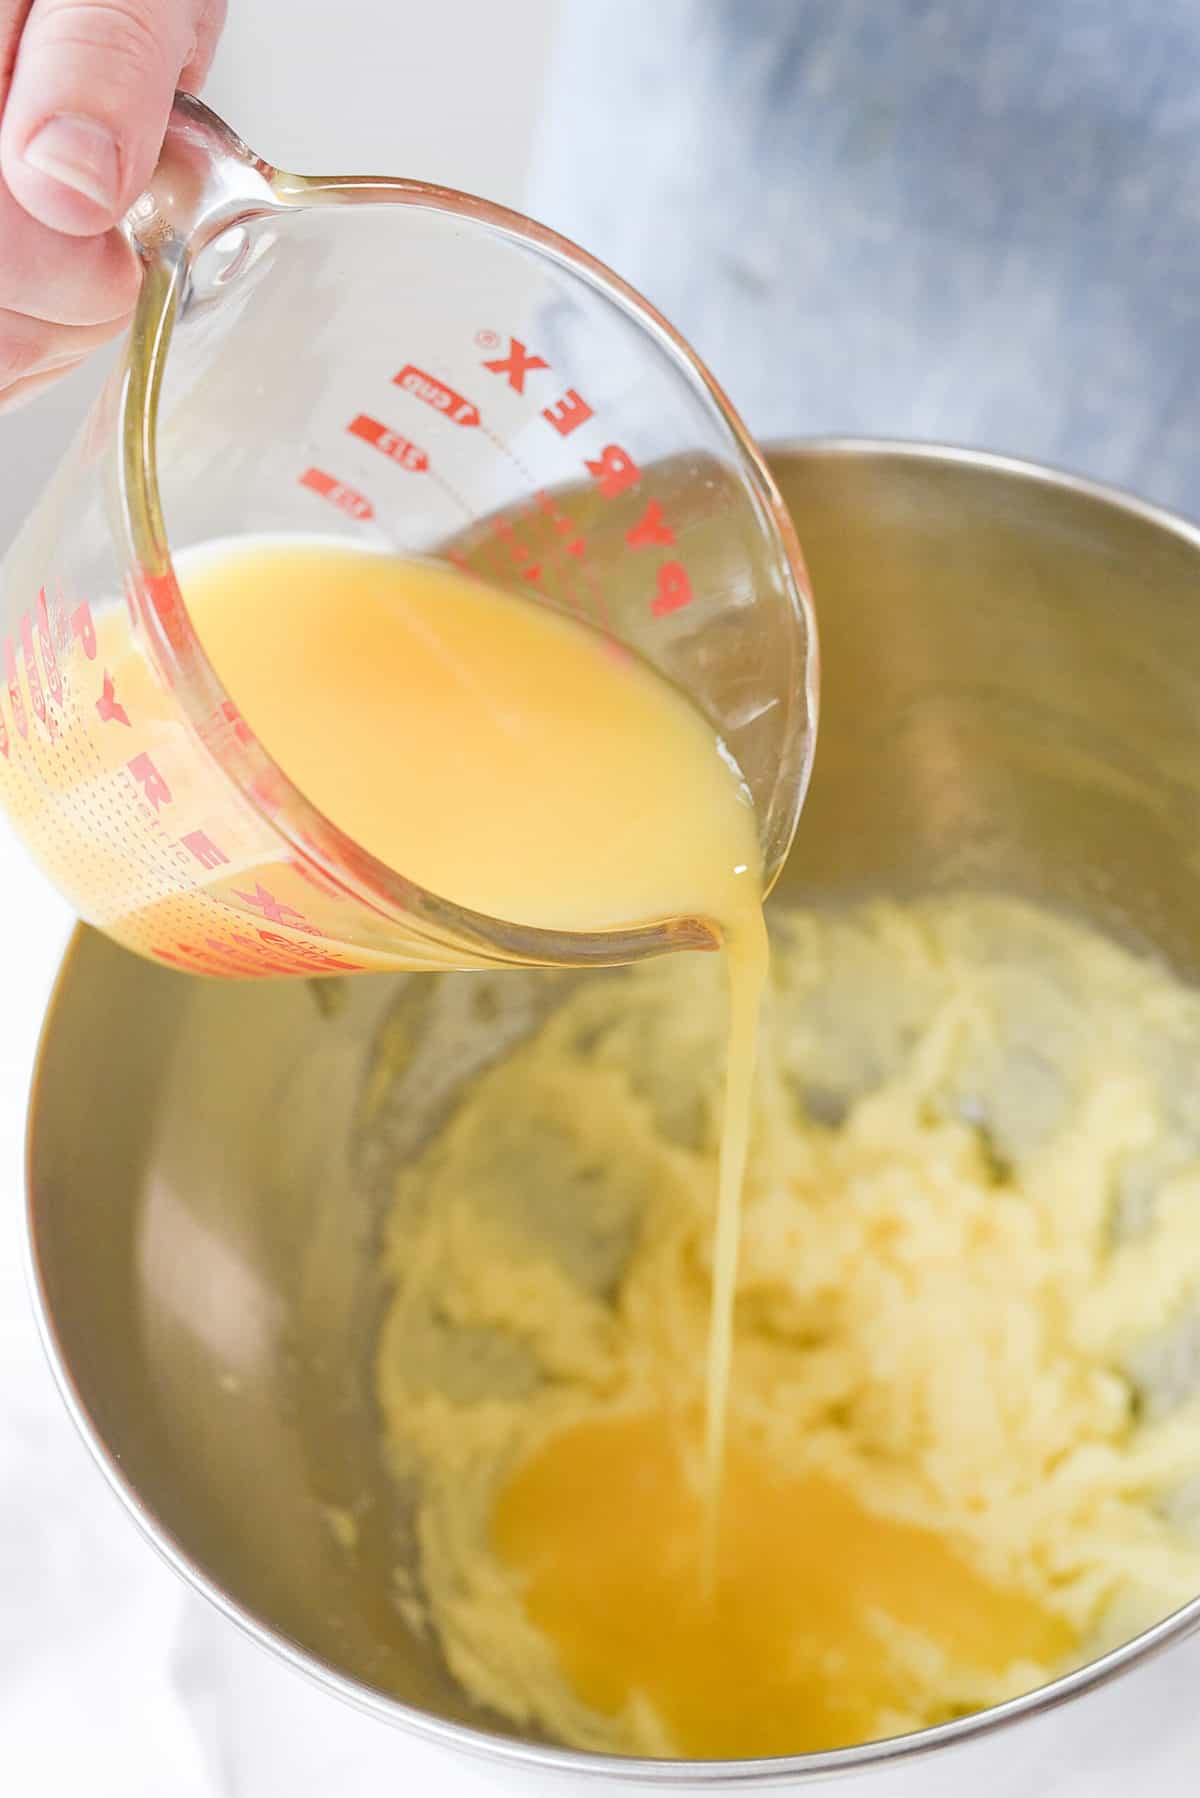 pouring orange juice into bowl